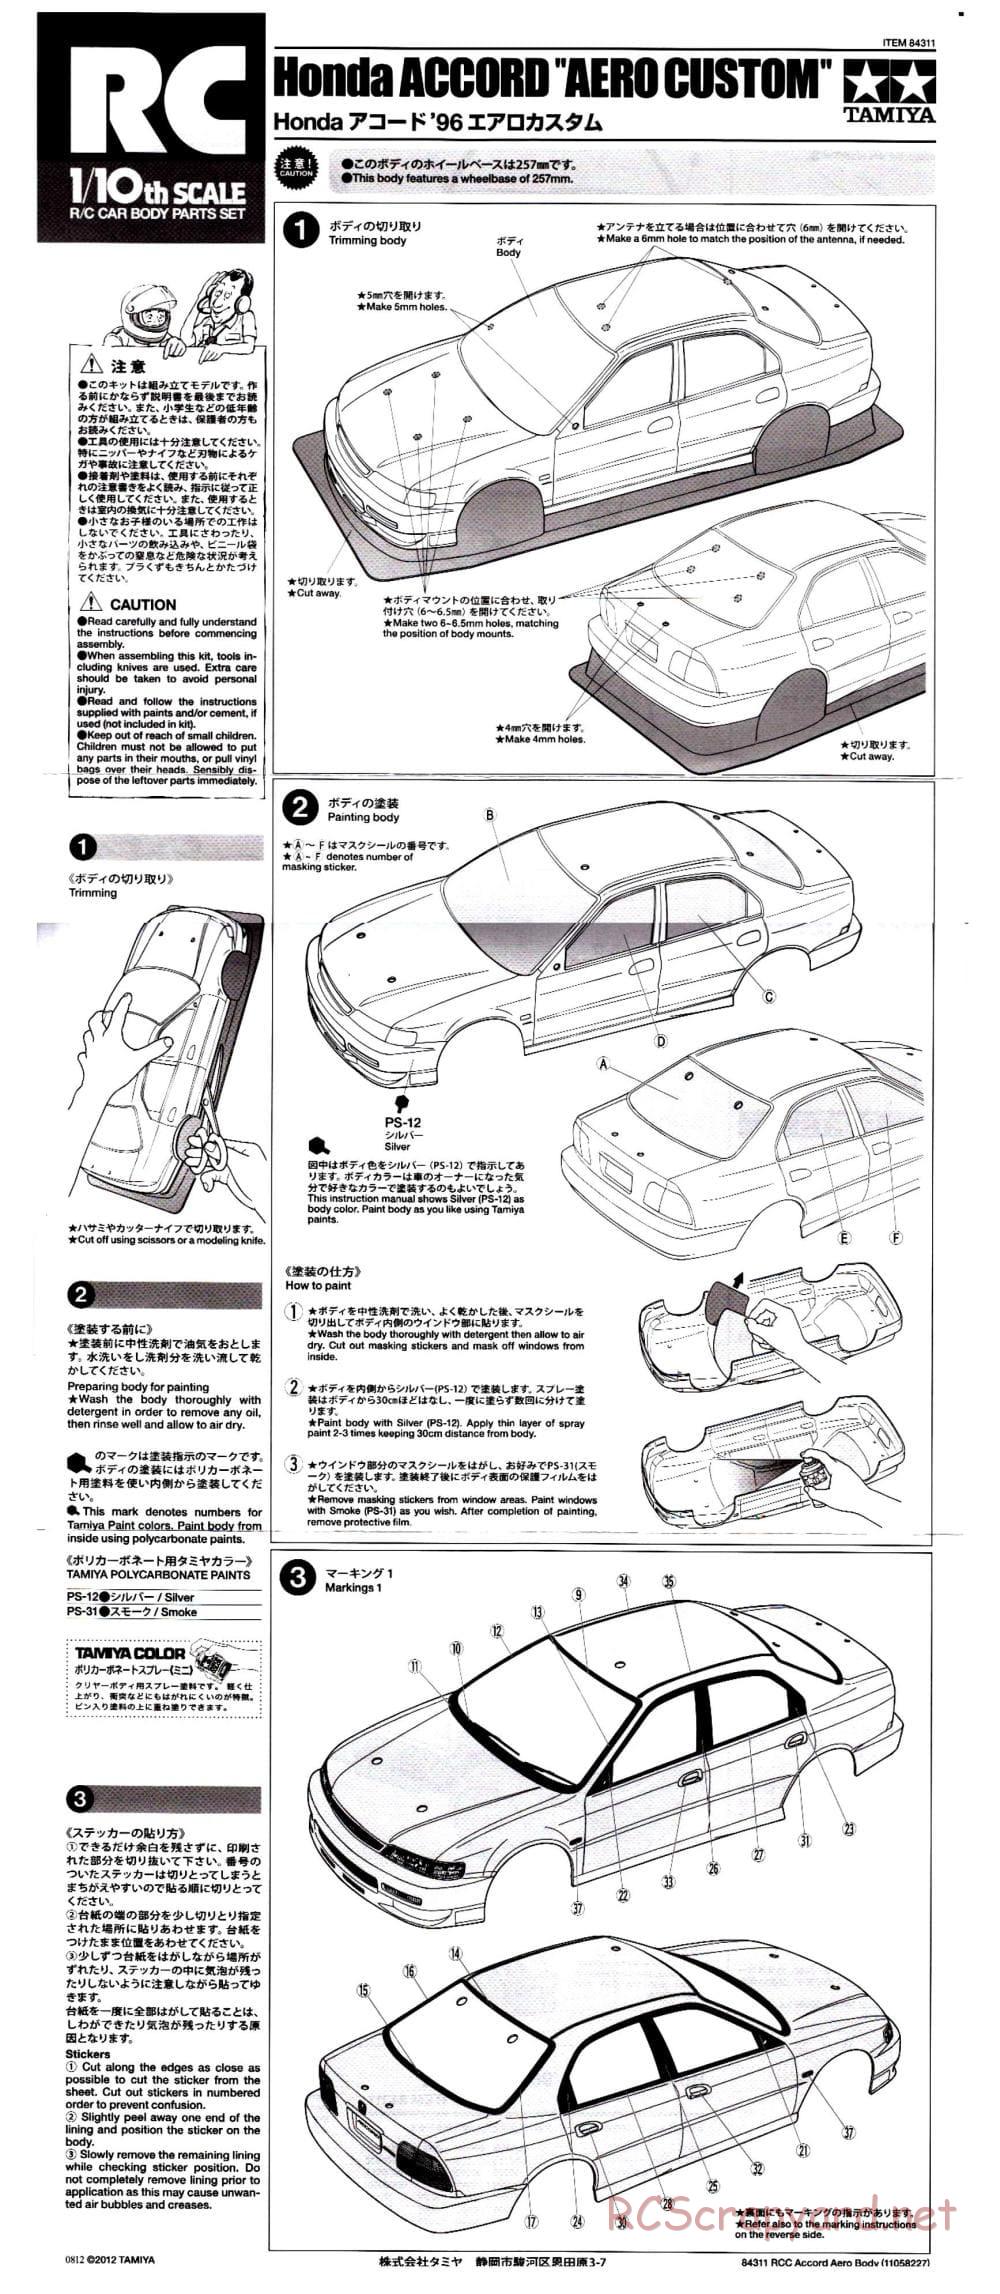 Tamiya - Honda Accord Aero Custom - Body - Manual - Page 1